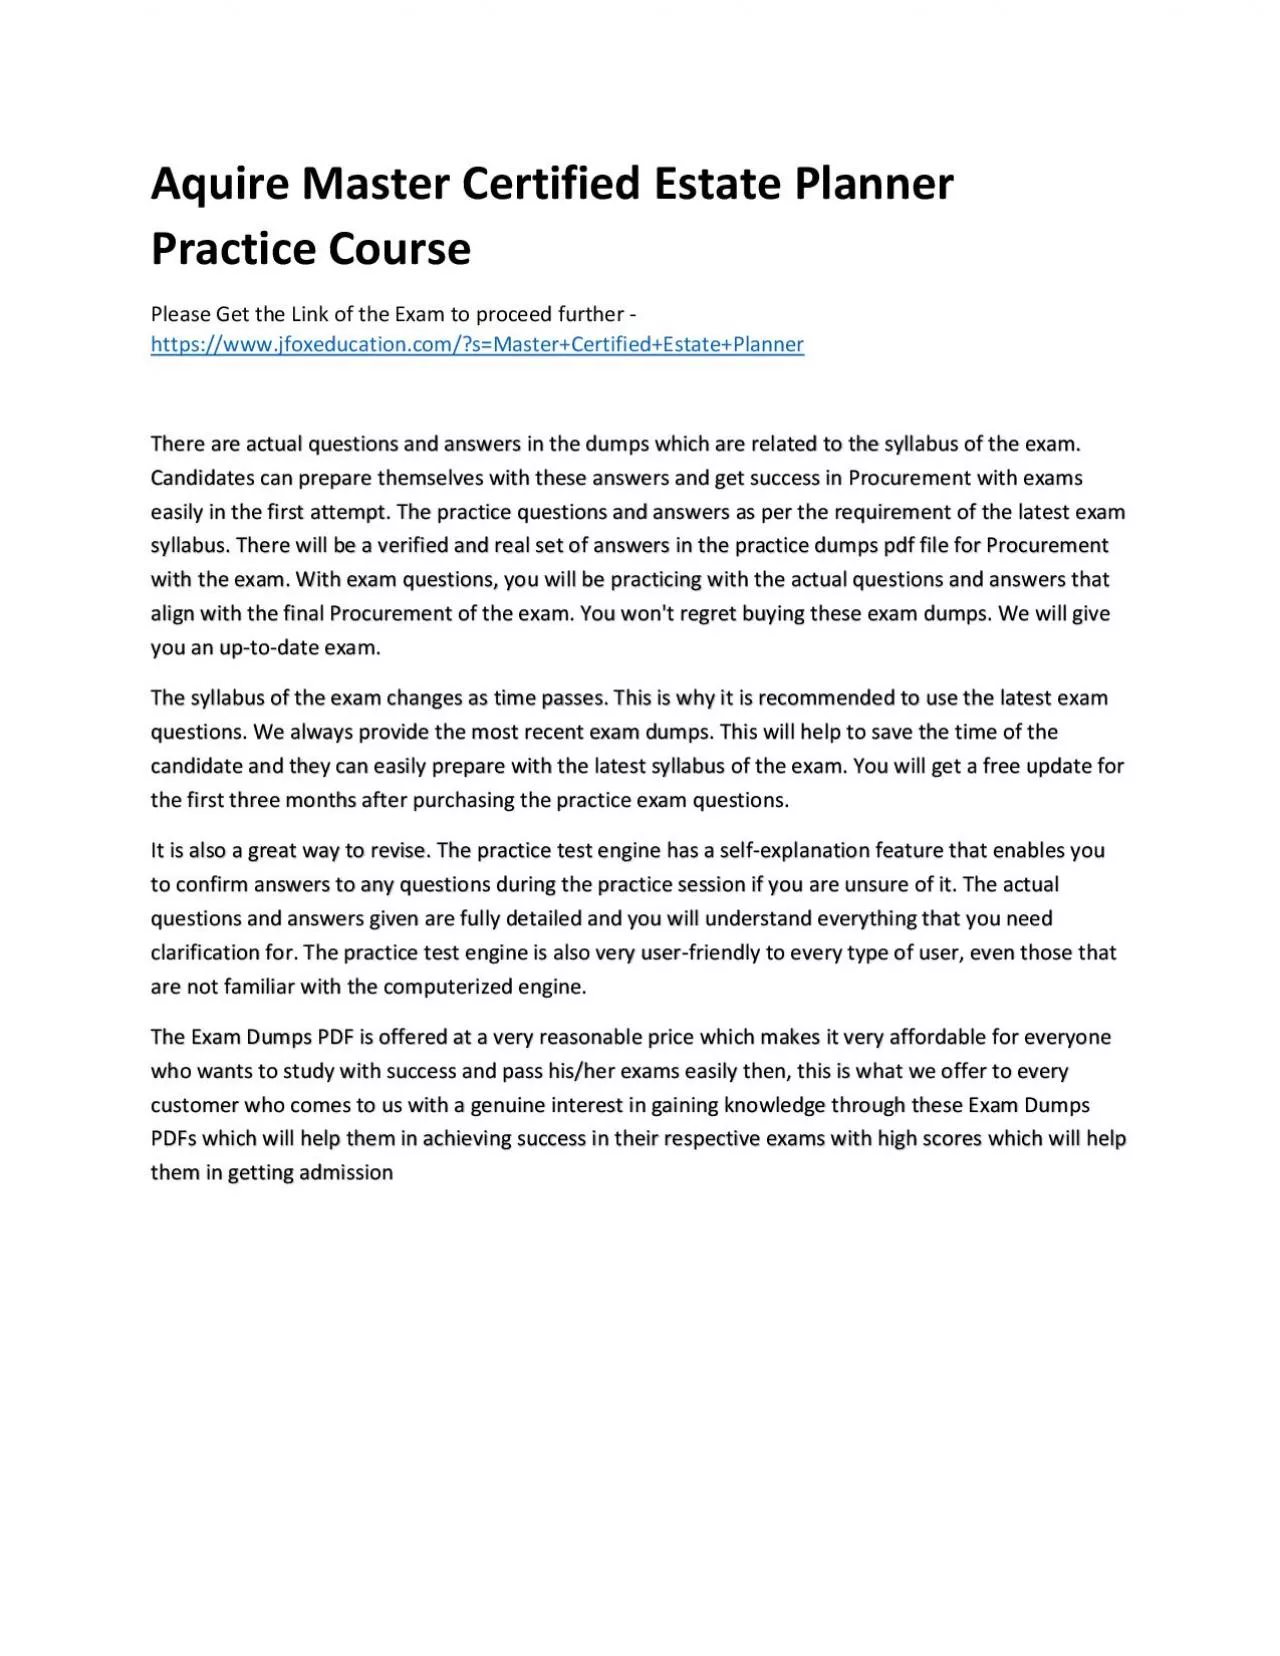 Aquire Master Certified Estate Planner Practice Course